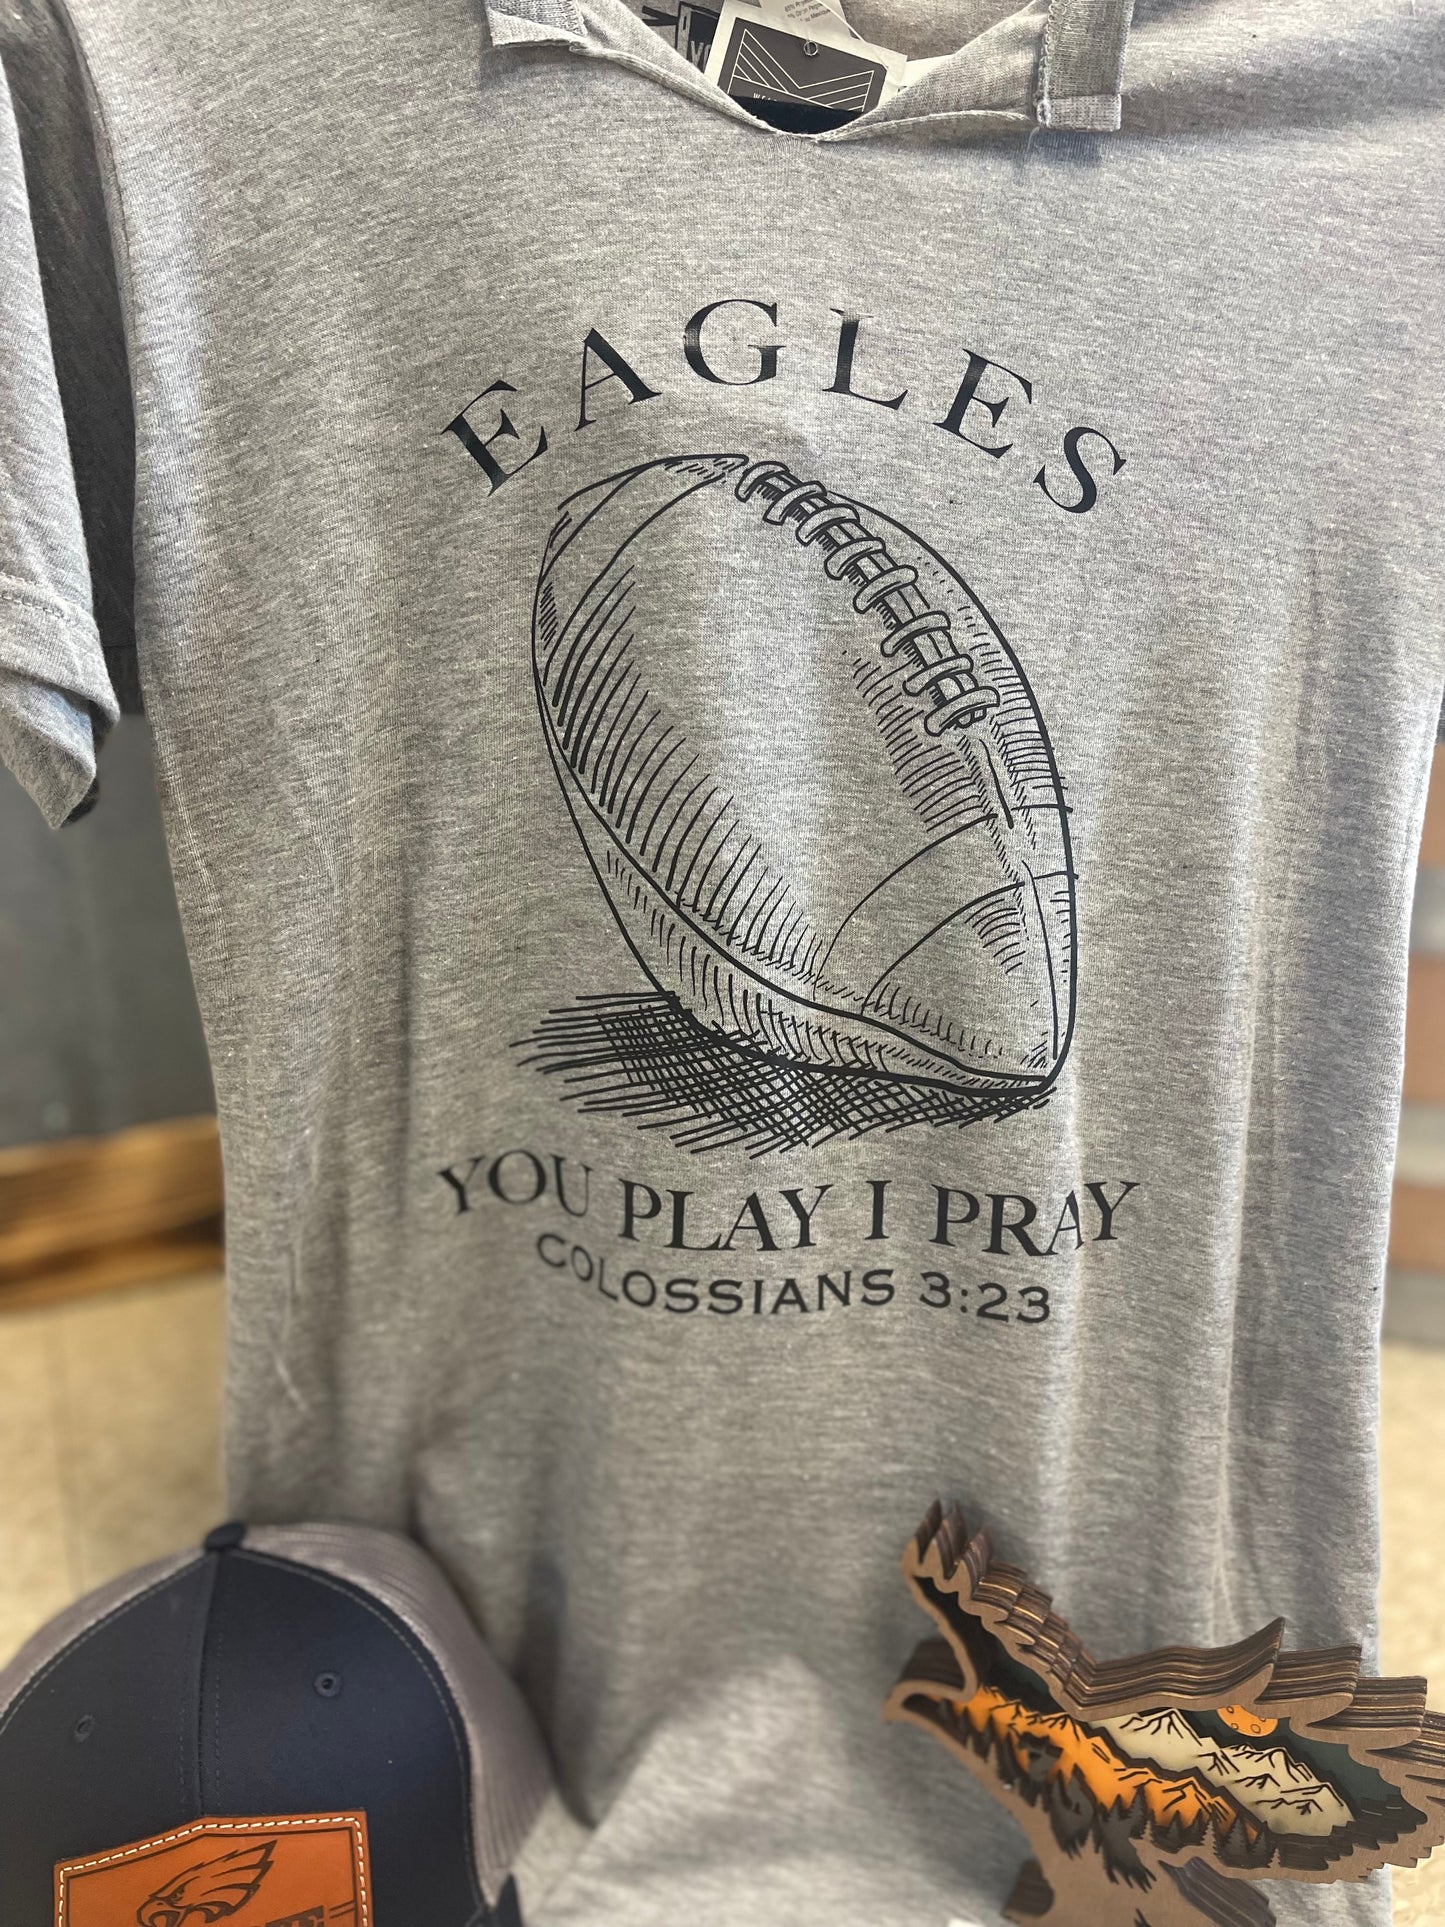 Eagles T-Shirt 3:23